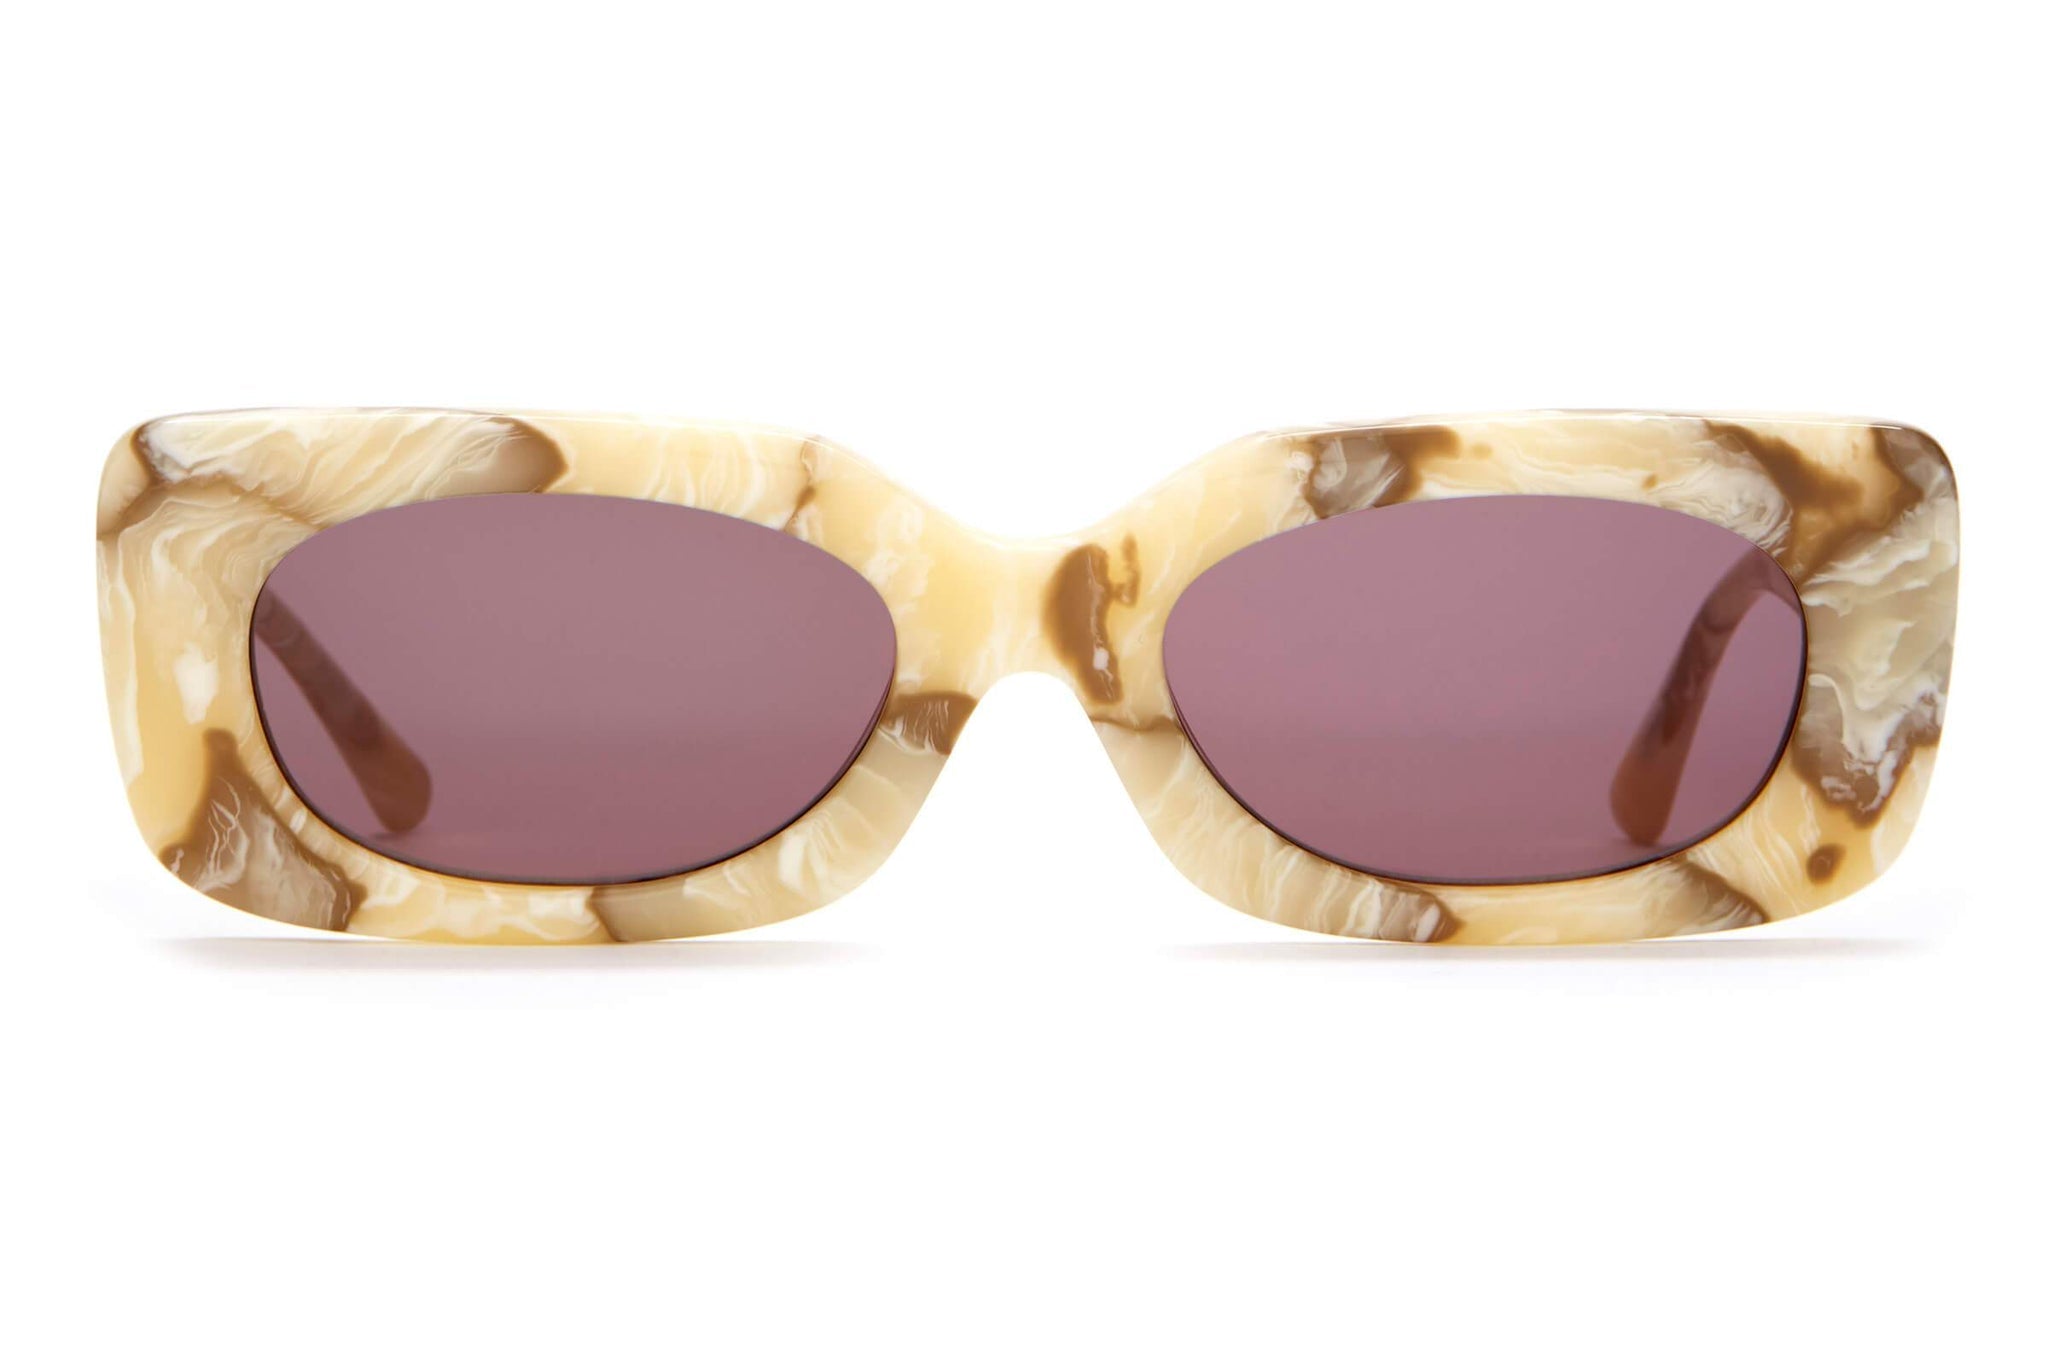 The Supa Phreek - Cream Marble Sunglasses from Crap Eyewear